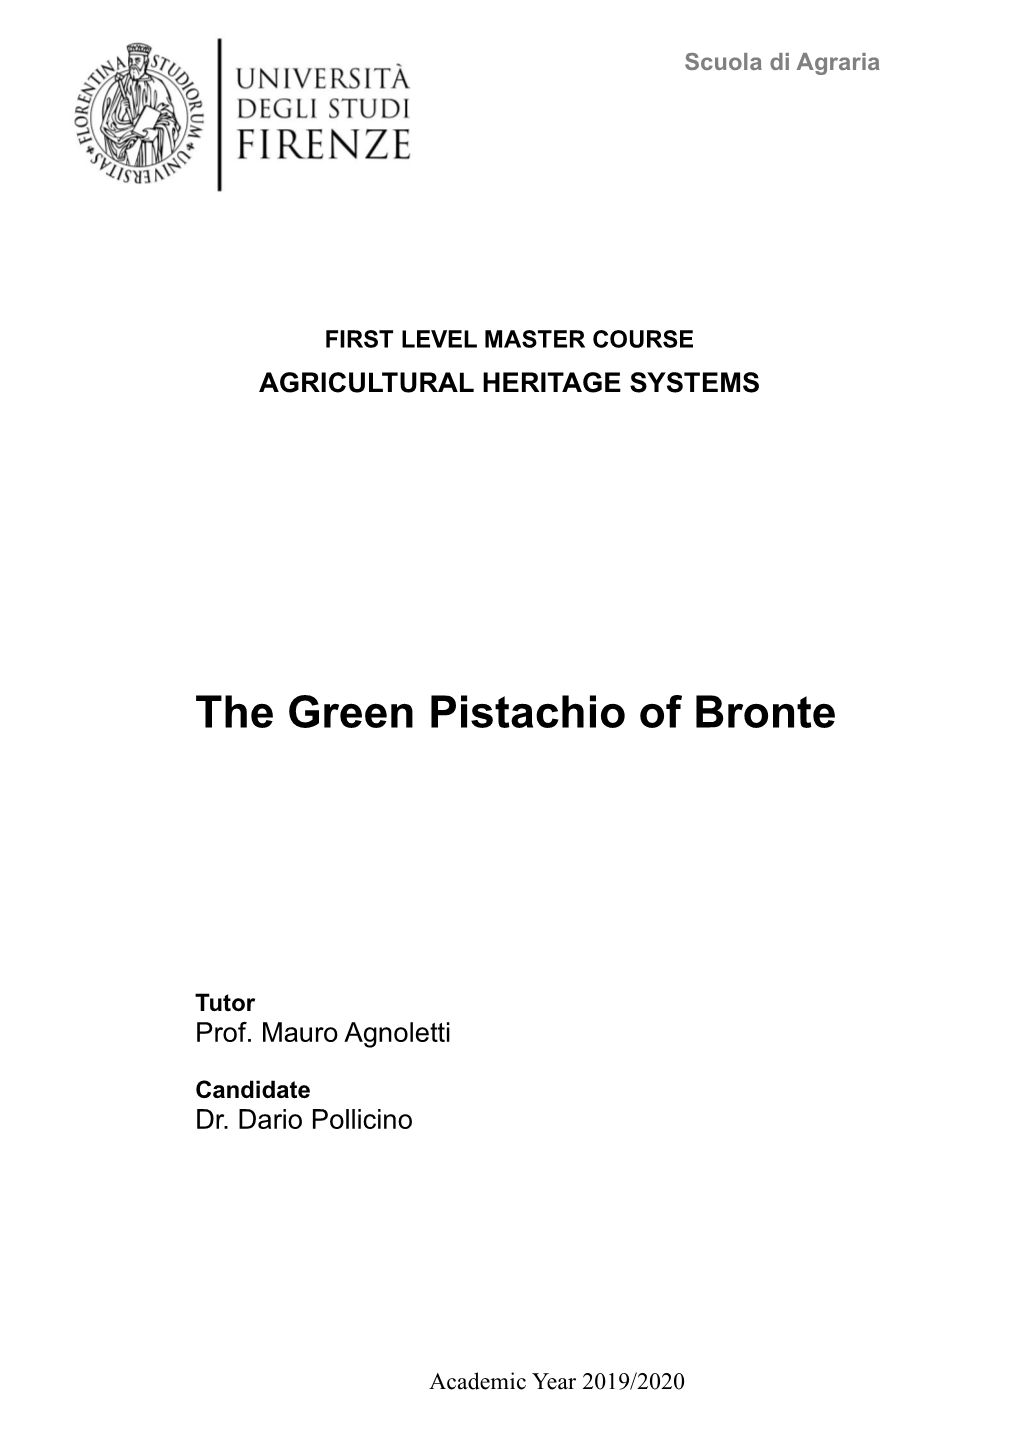 The Green Pistachio of Bronte